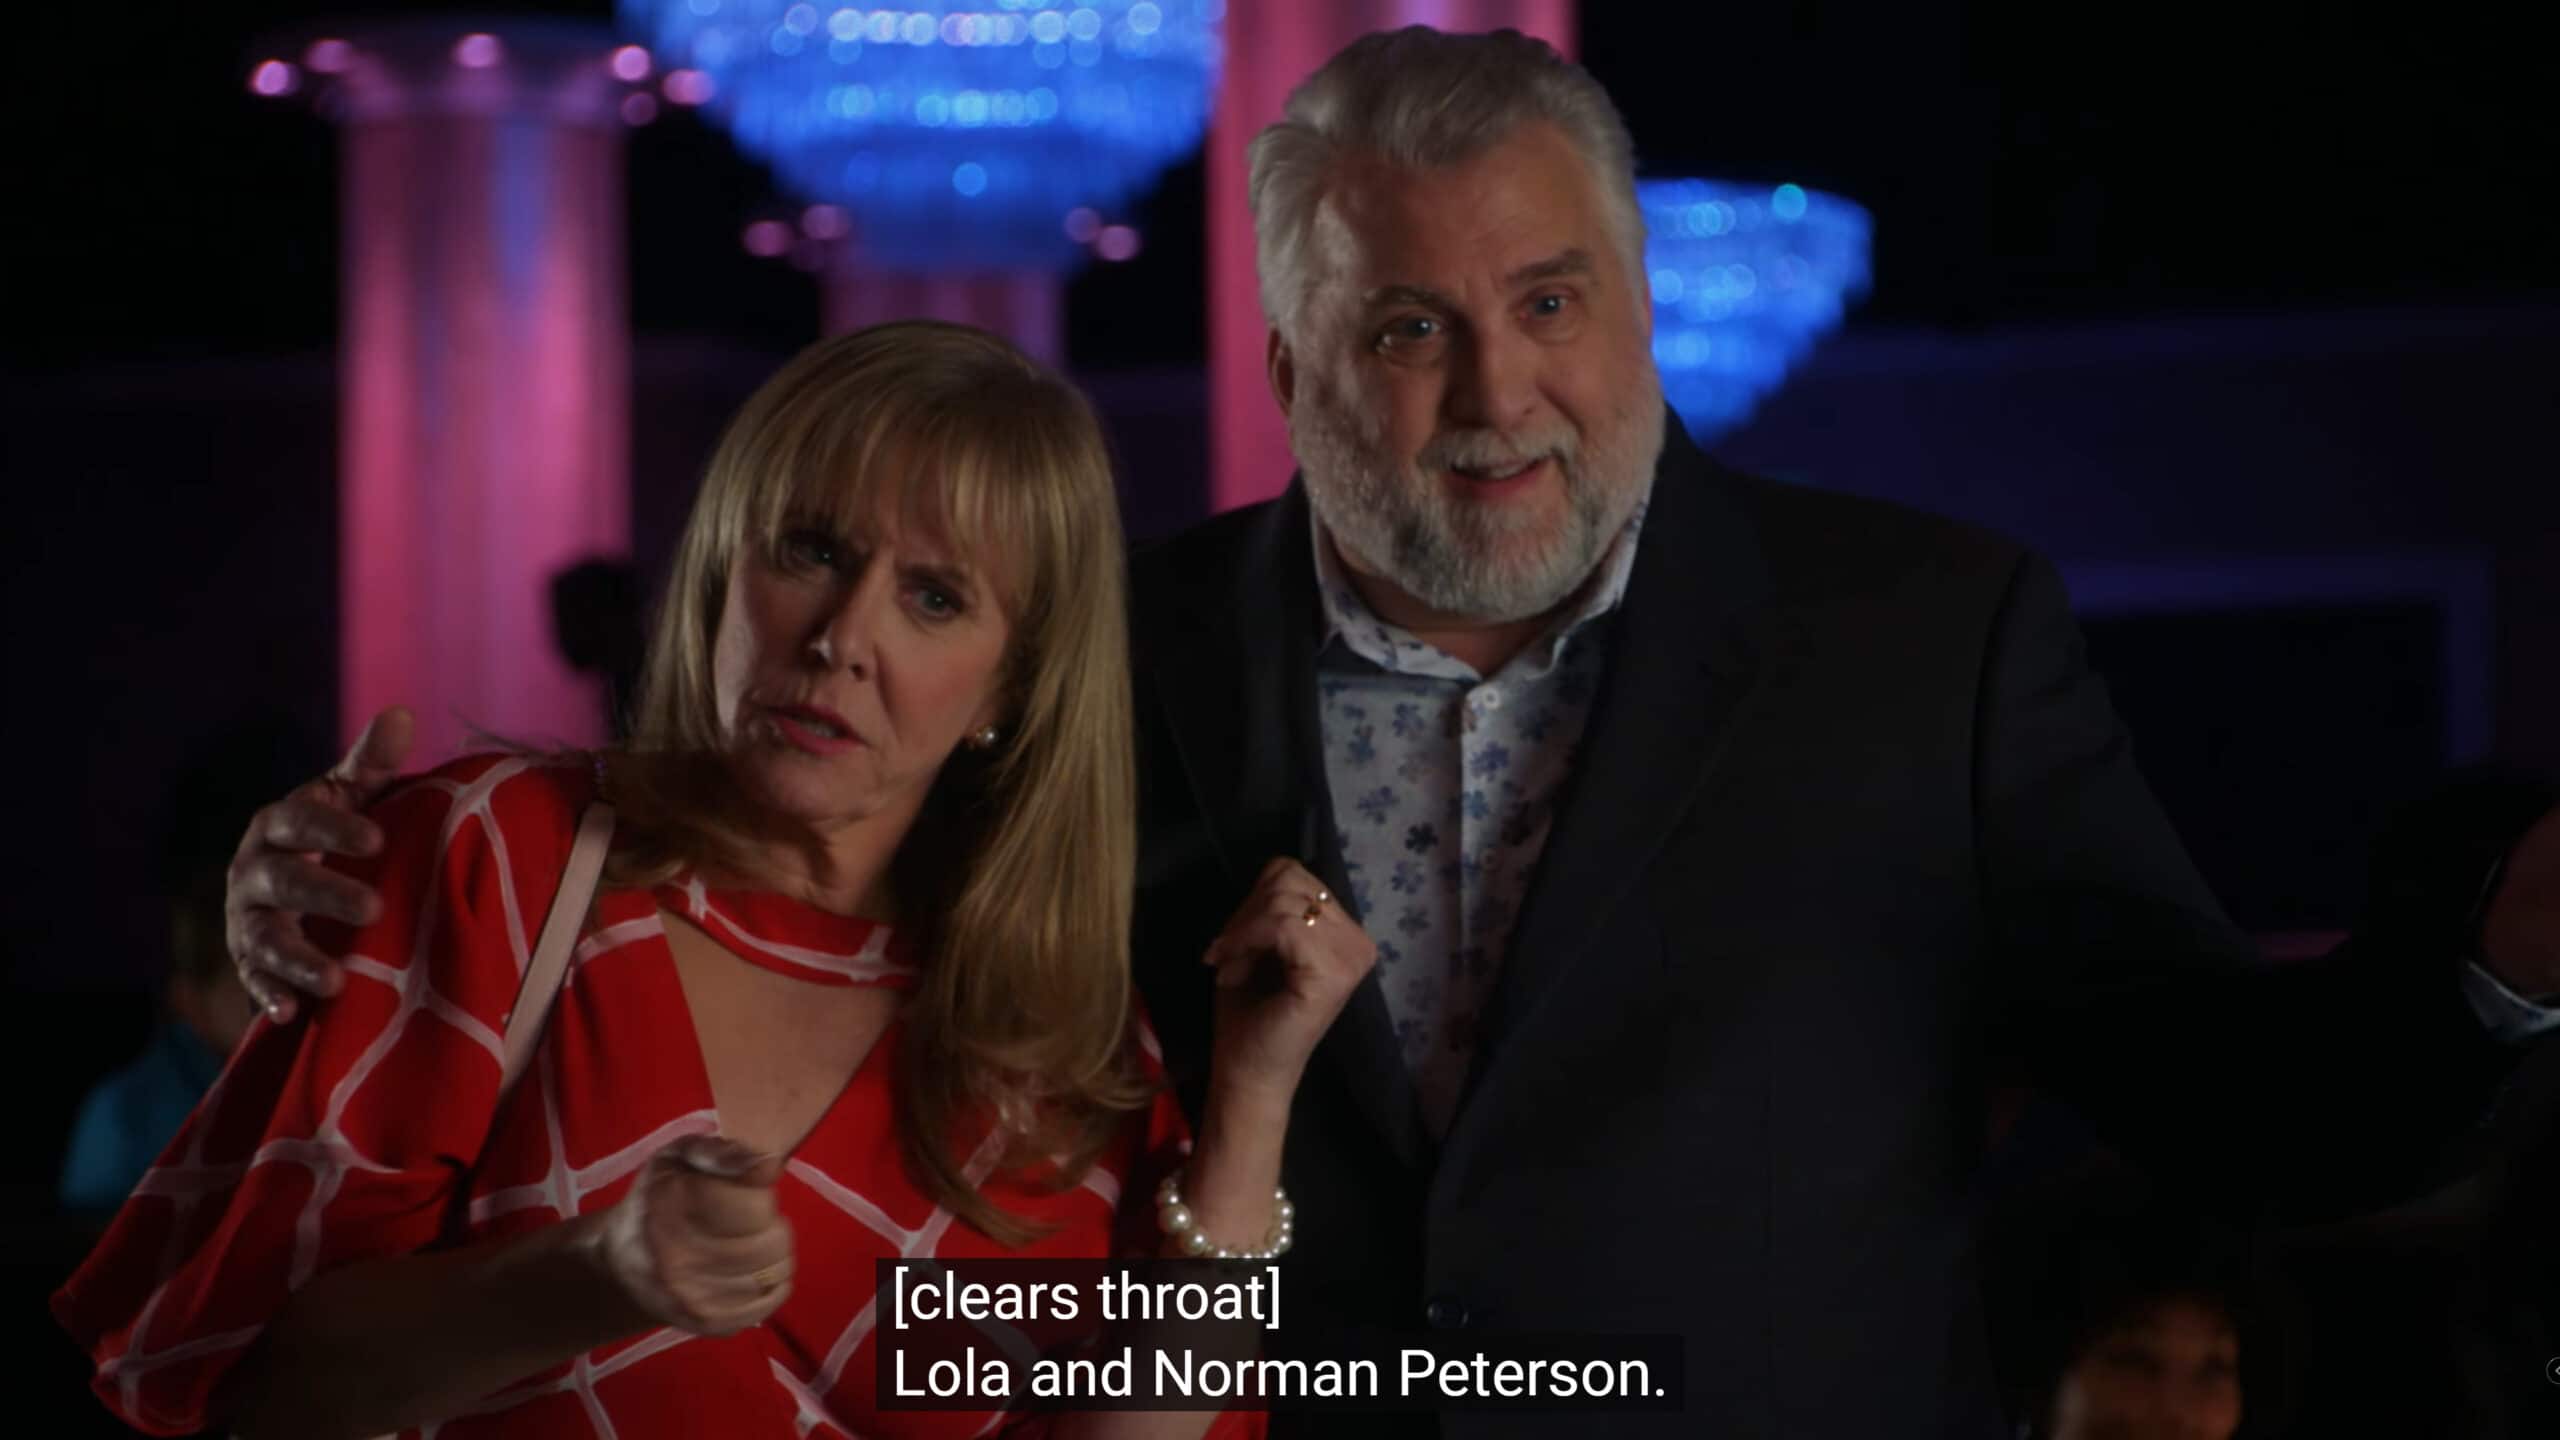 Lola Peterson (Romy Rosemont) and Norman Peterson (Daniel Roebuck) reintroducing themselves